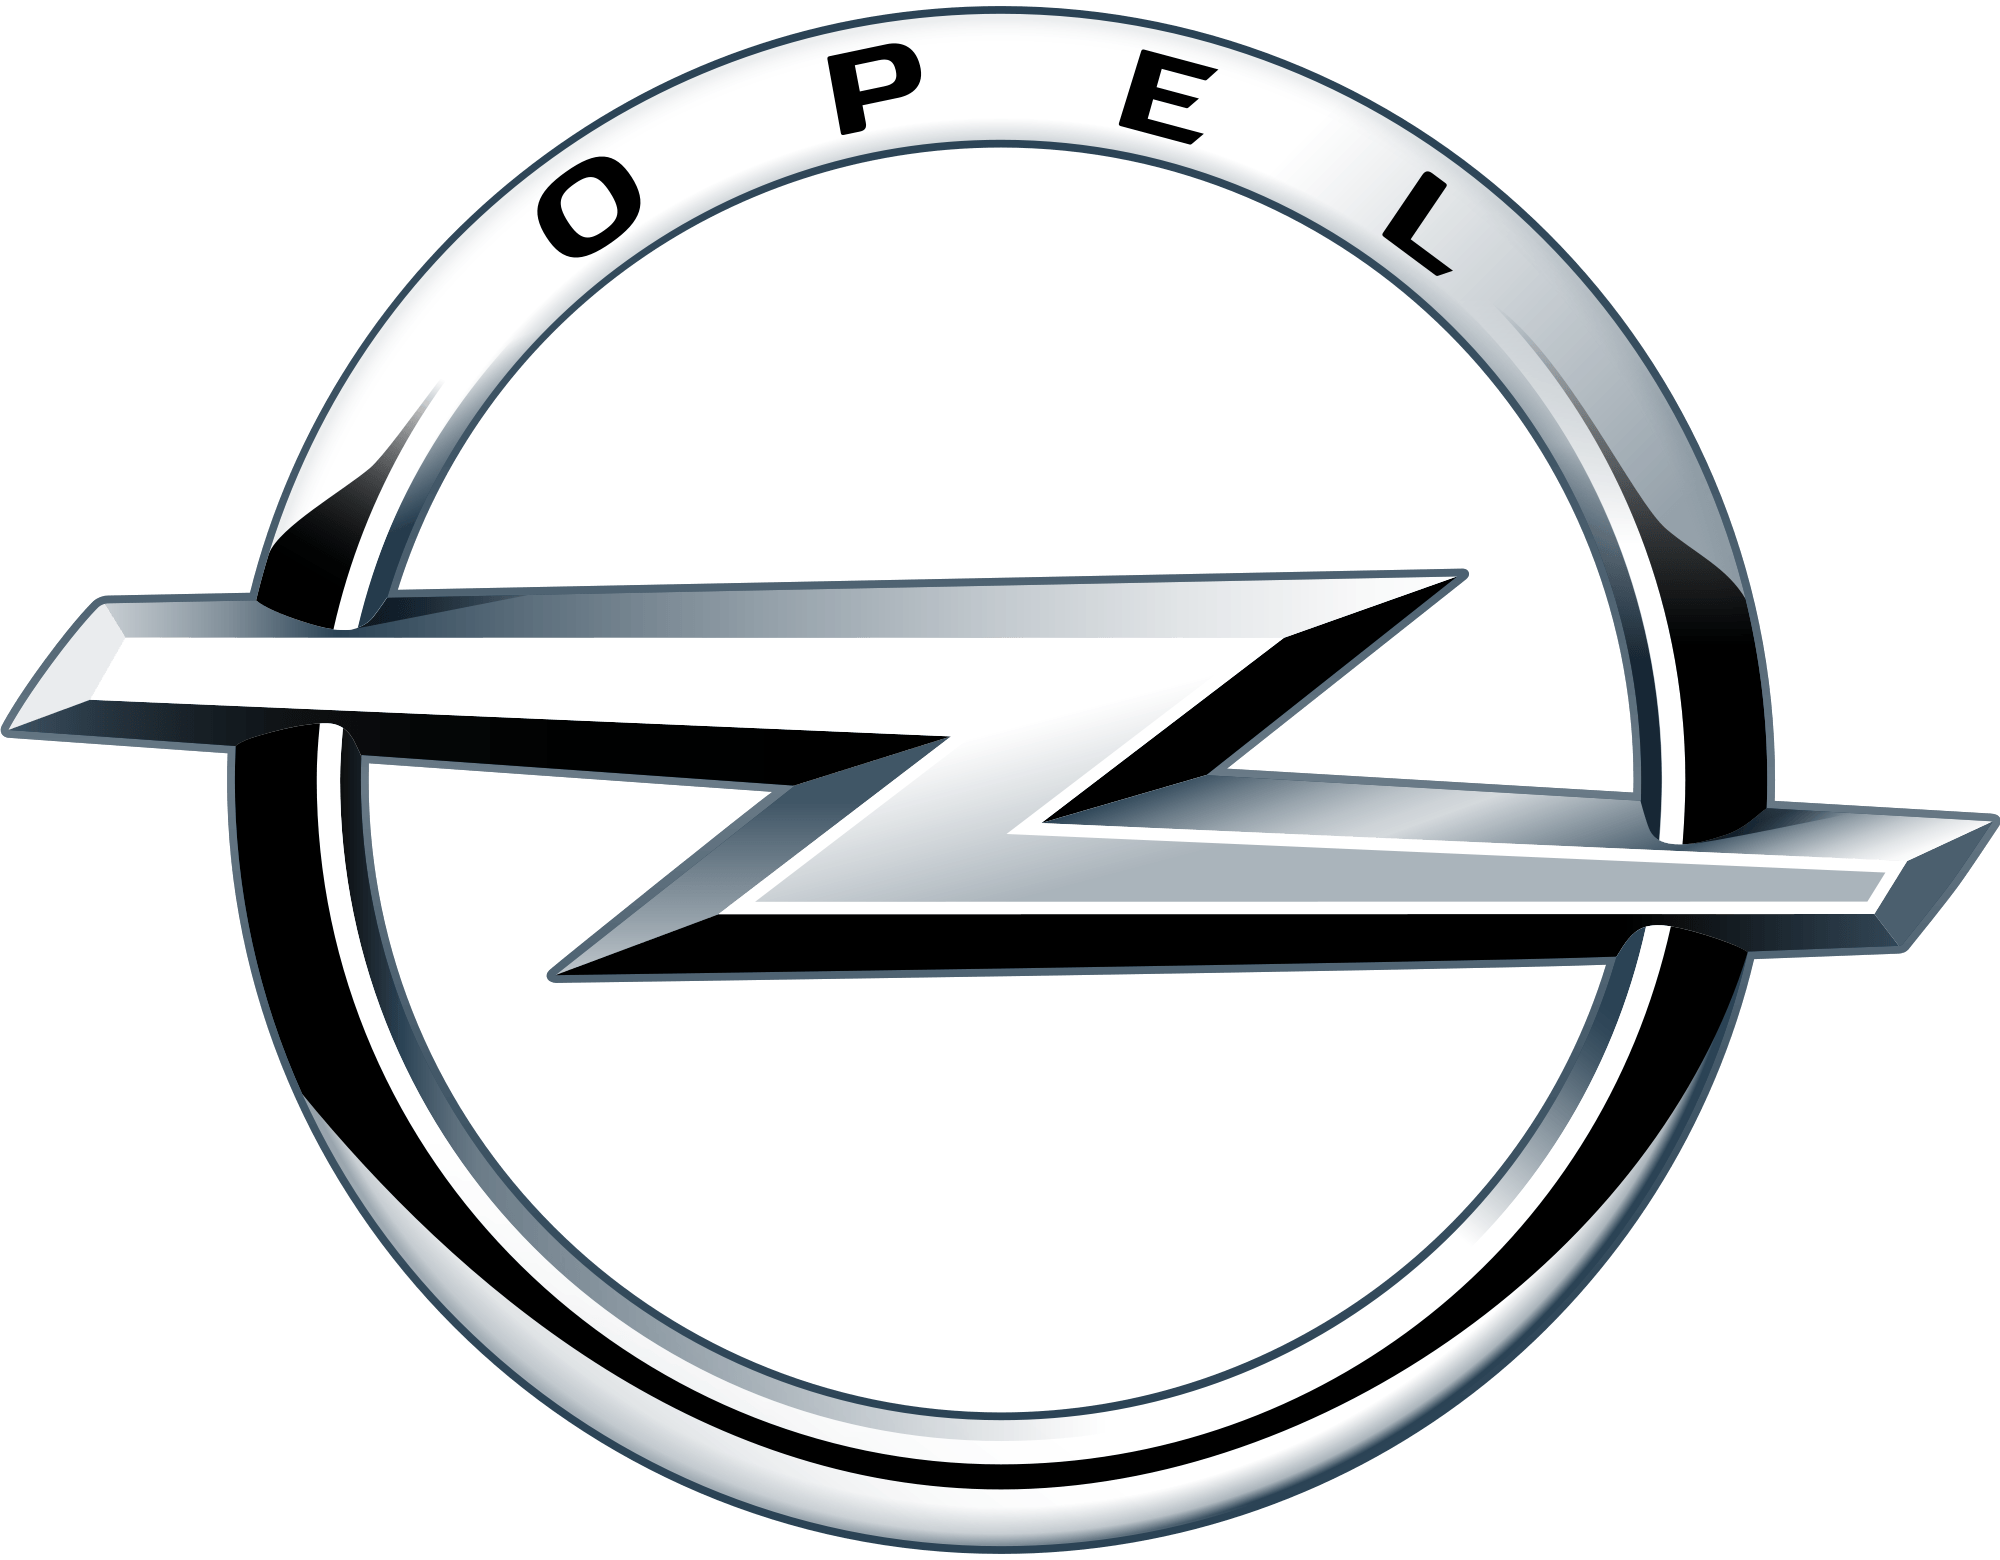 German Car Logo - German Car Brands, Companies and Manufacturers | Car Brand Names.com